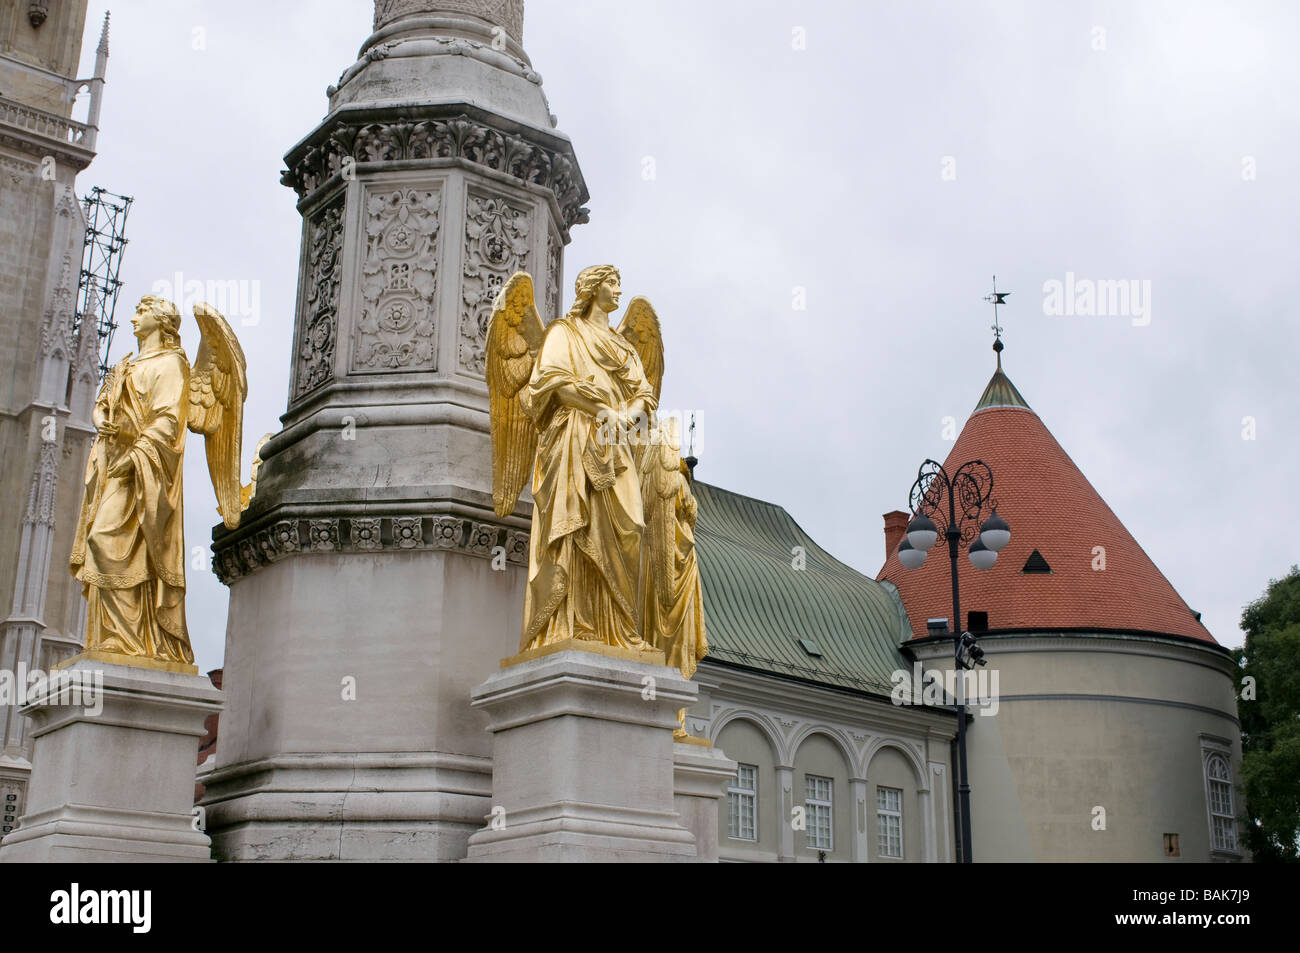 Three awe inspiring religious golden statues at a church Zagreb Croatia Eastern Europe Stock Photo